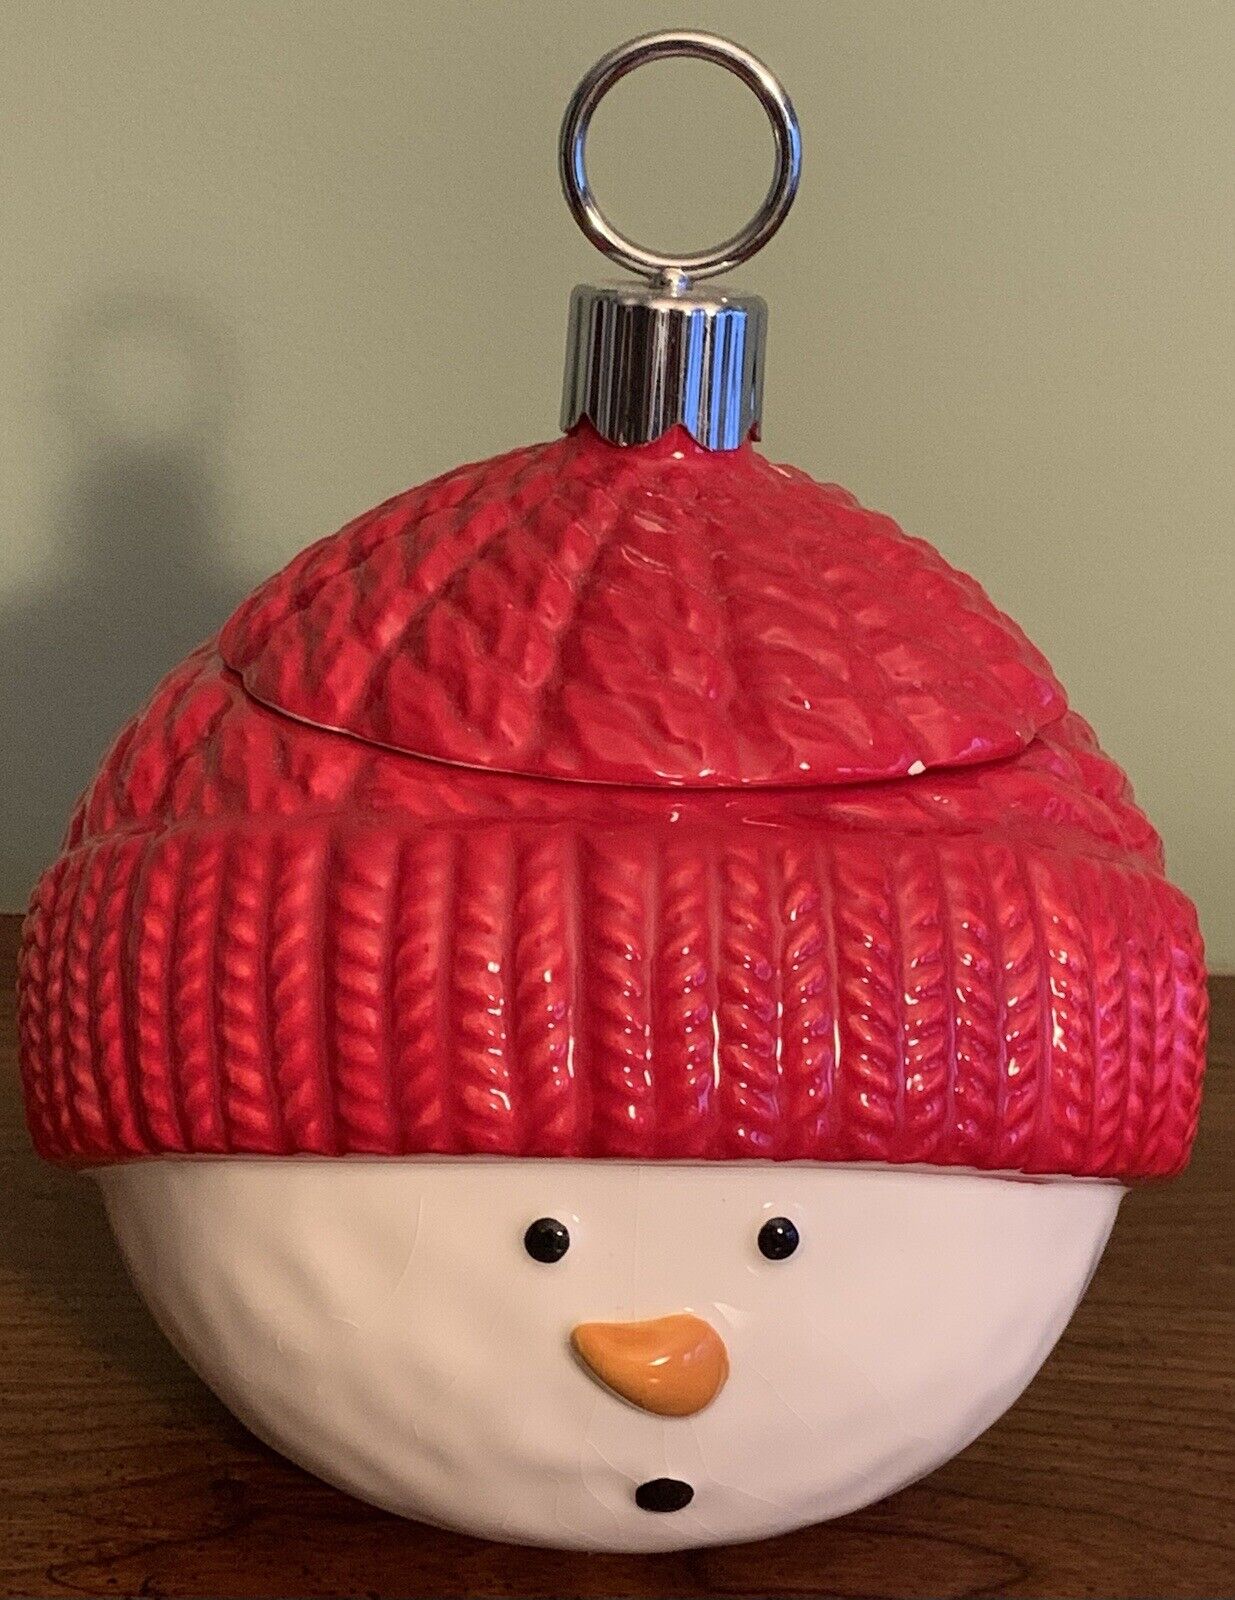 Teleflora 2020 Christmas Snowman Ornament Lidded Jar / Candy Dish Holiday Decor